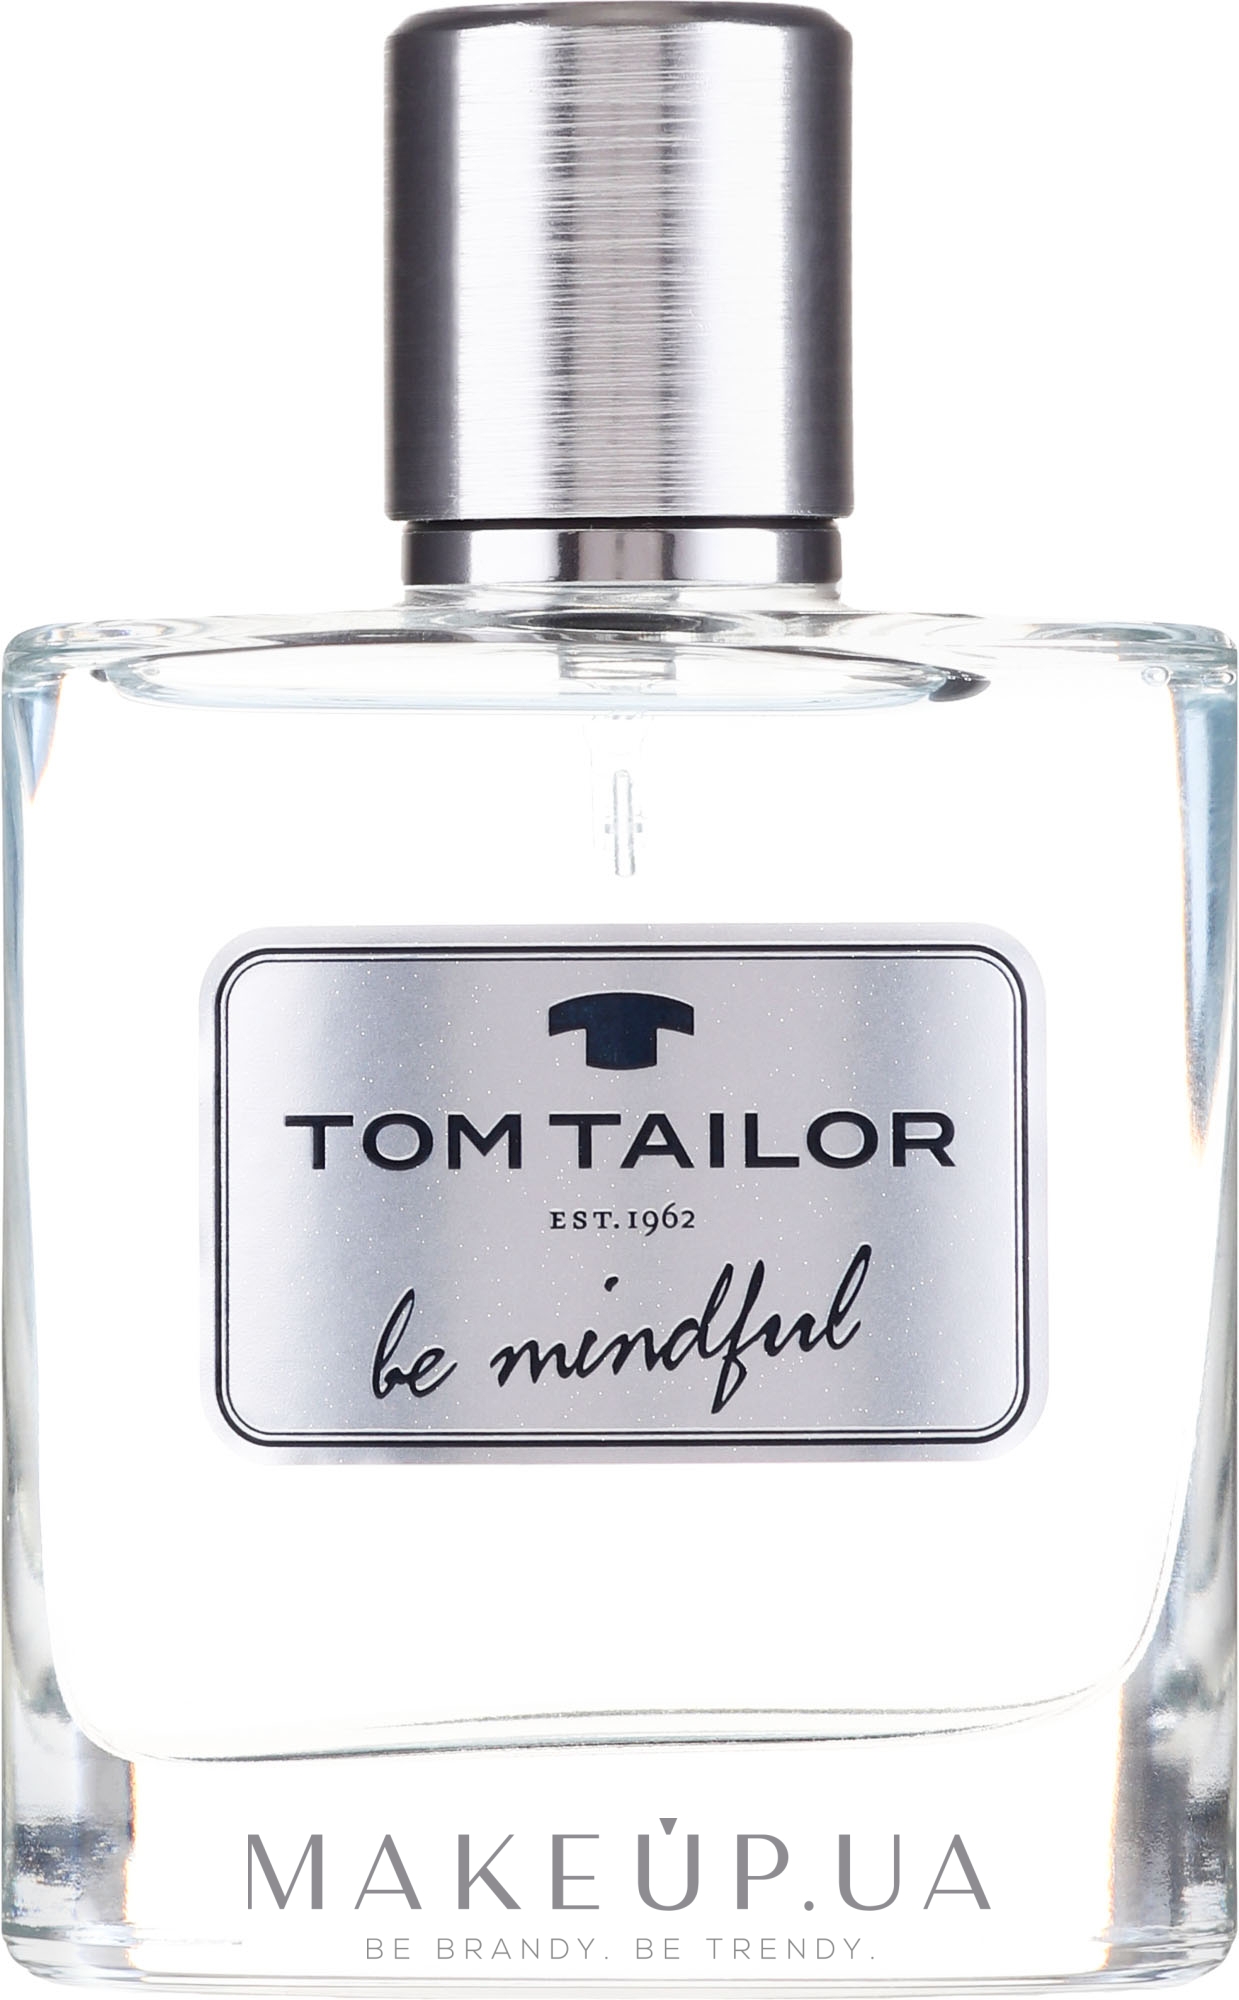 Tom Tailor est 1962. Tom Tailor духи be Mindful. Tom Tailor be Mindful woman. Tom Tailor be Mindful man. Том тейлор урбан